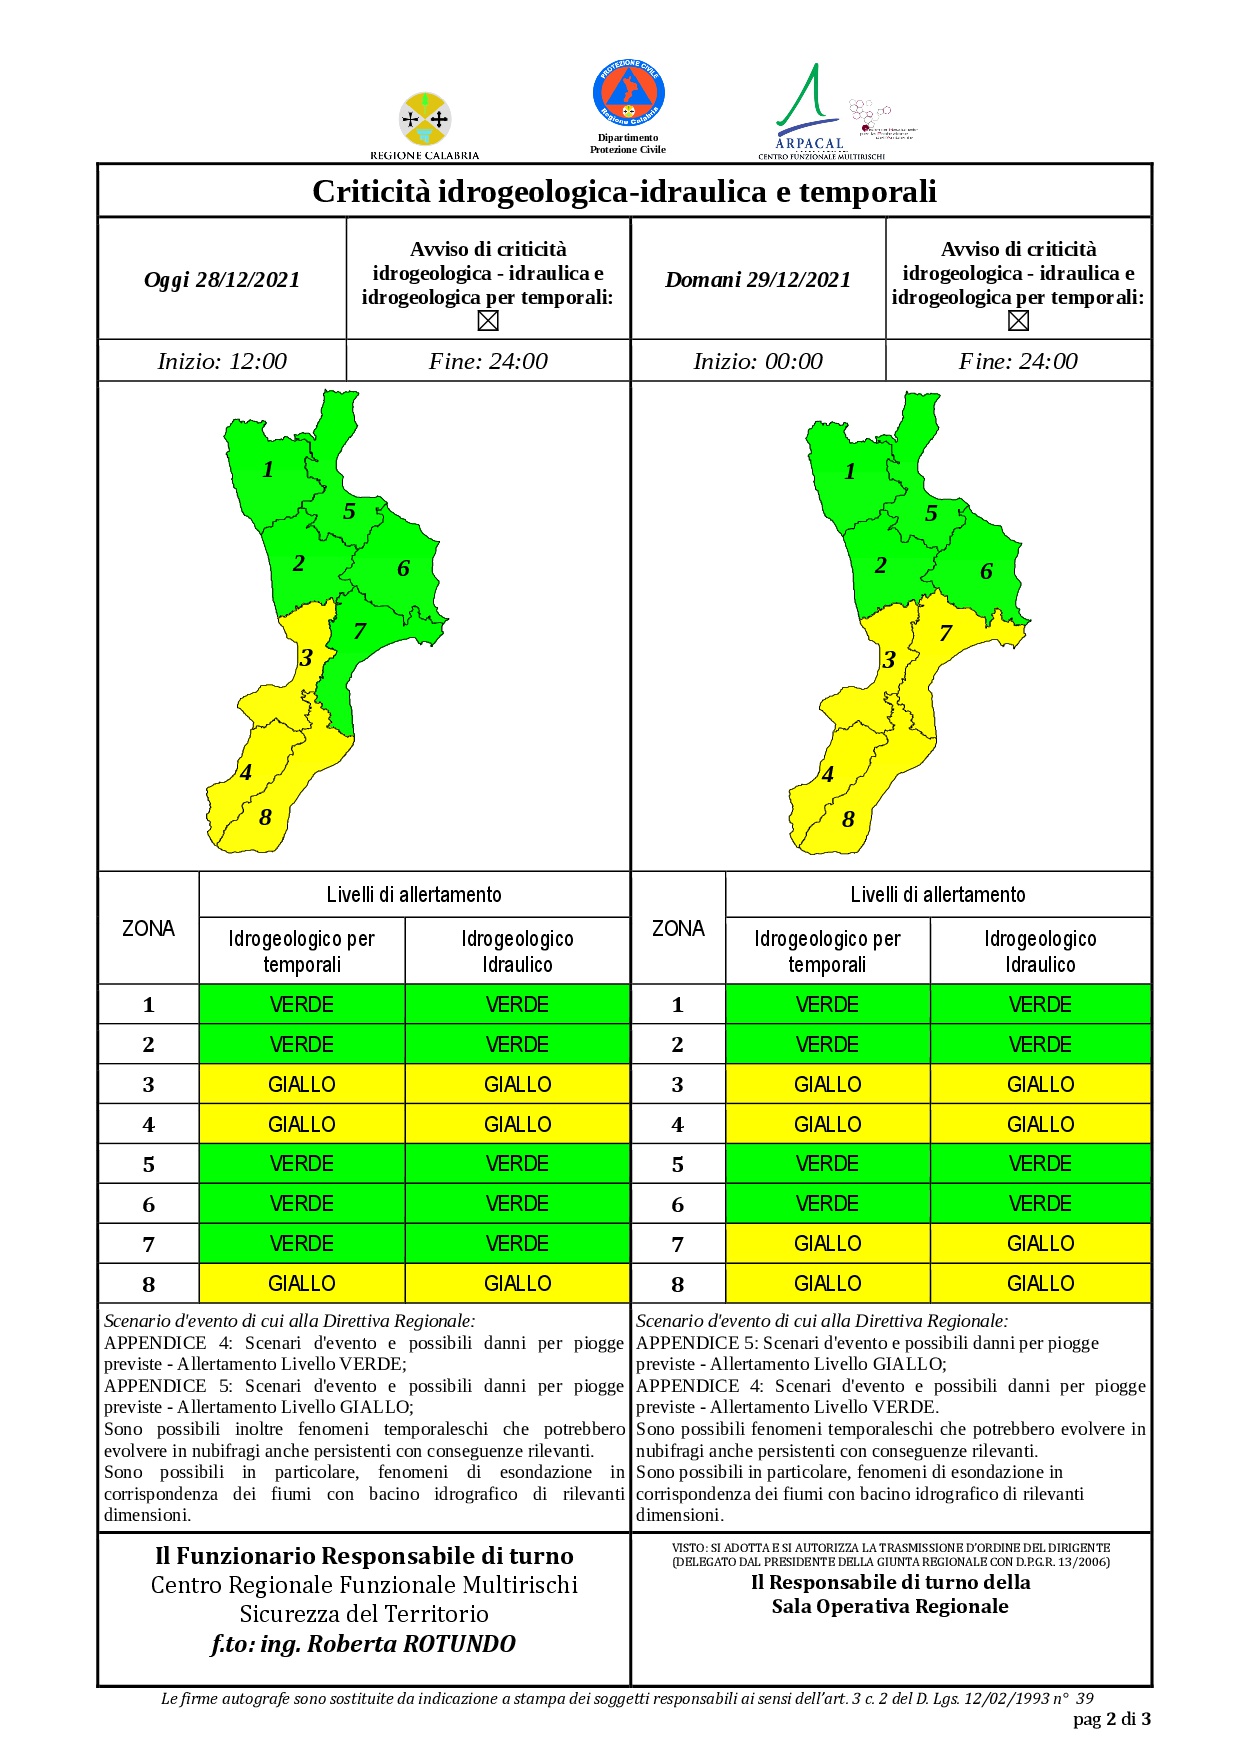 Criticità idrogeologica-idraulica e temporali in Calabria 28-12-2021